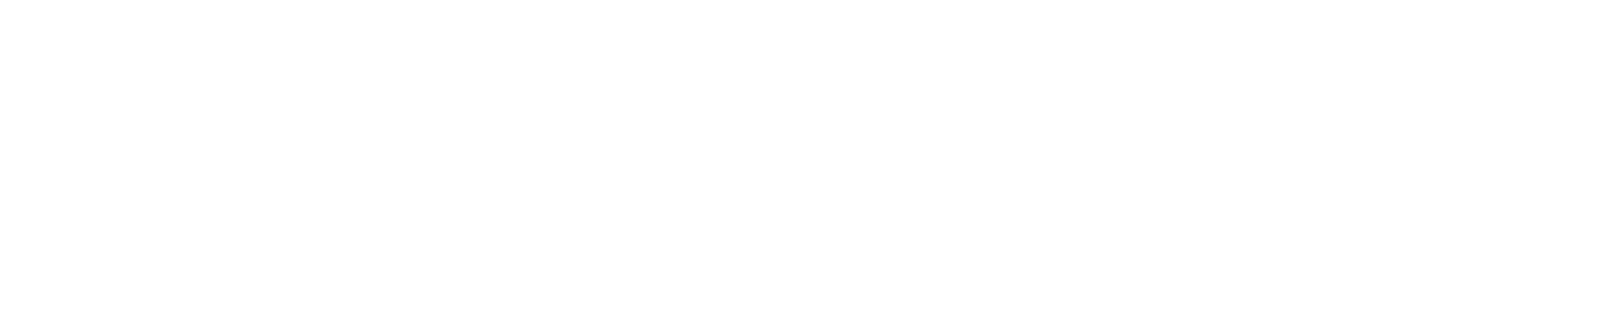 Crompton Greaves Consumer Electricals Logo groß für dunkle Hintergründe (transparentes PNG)